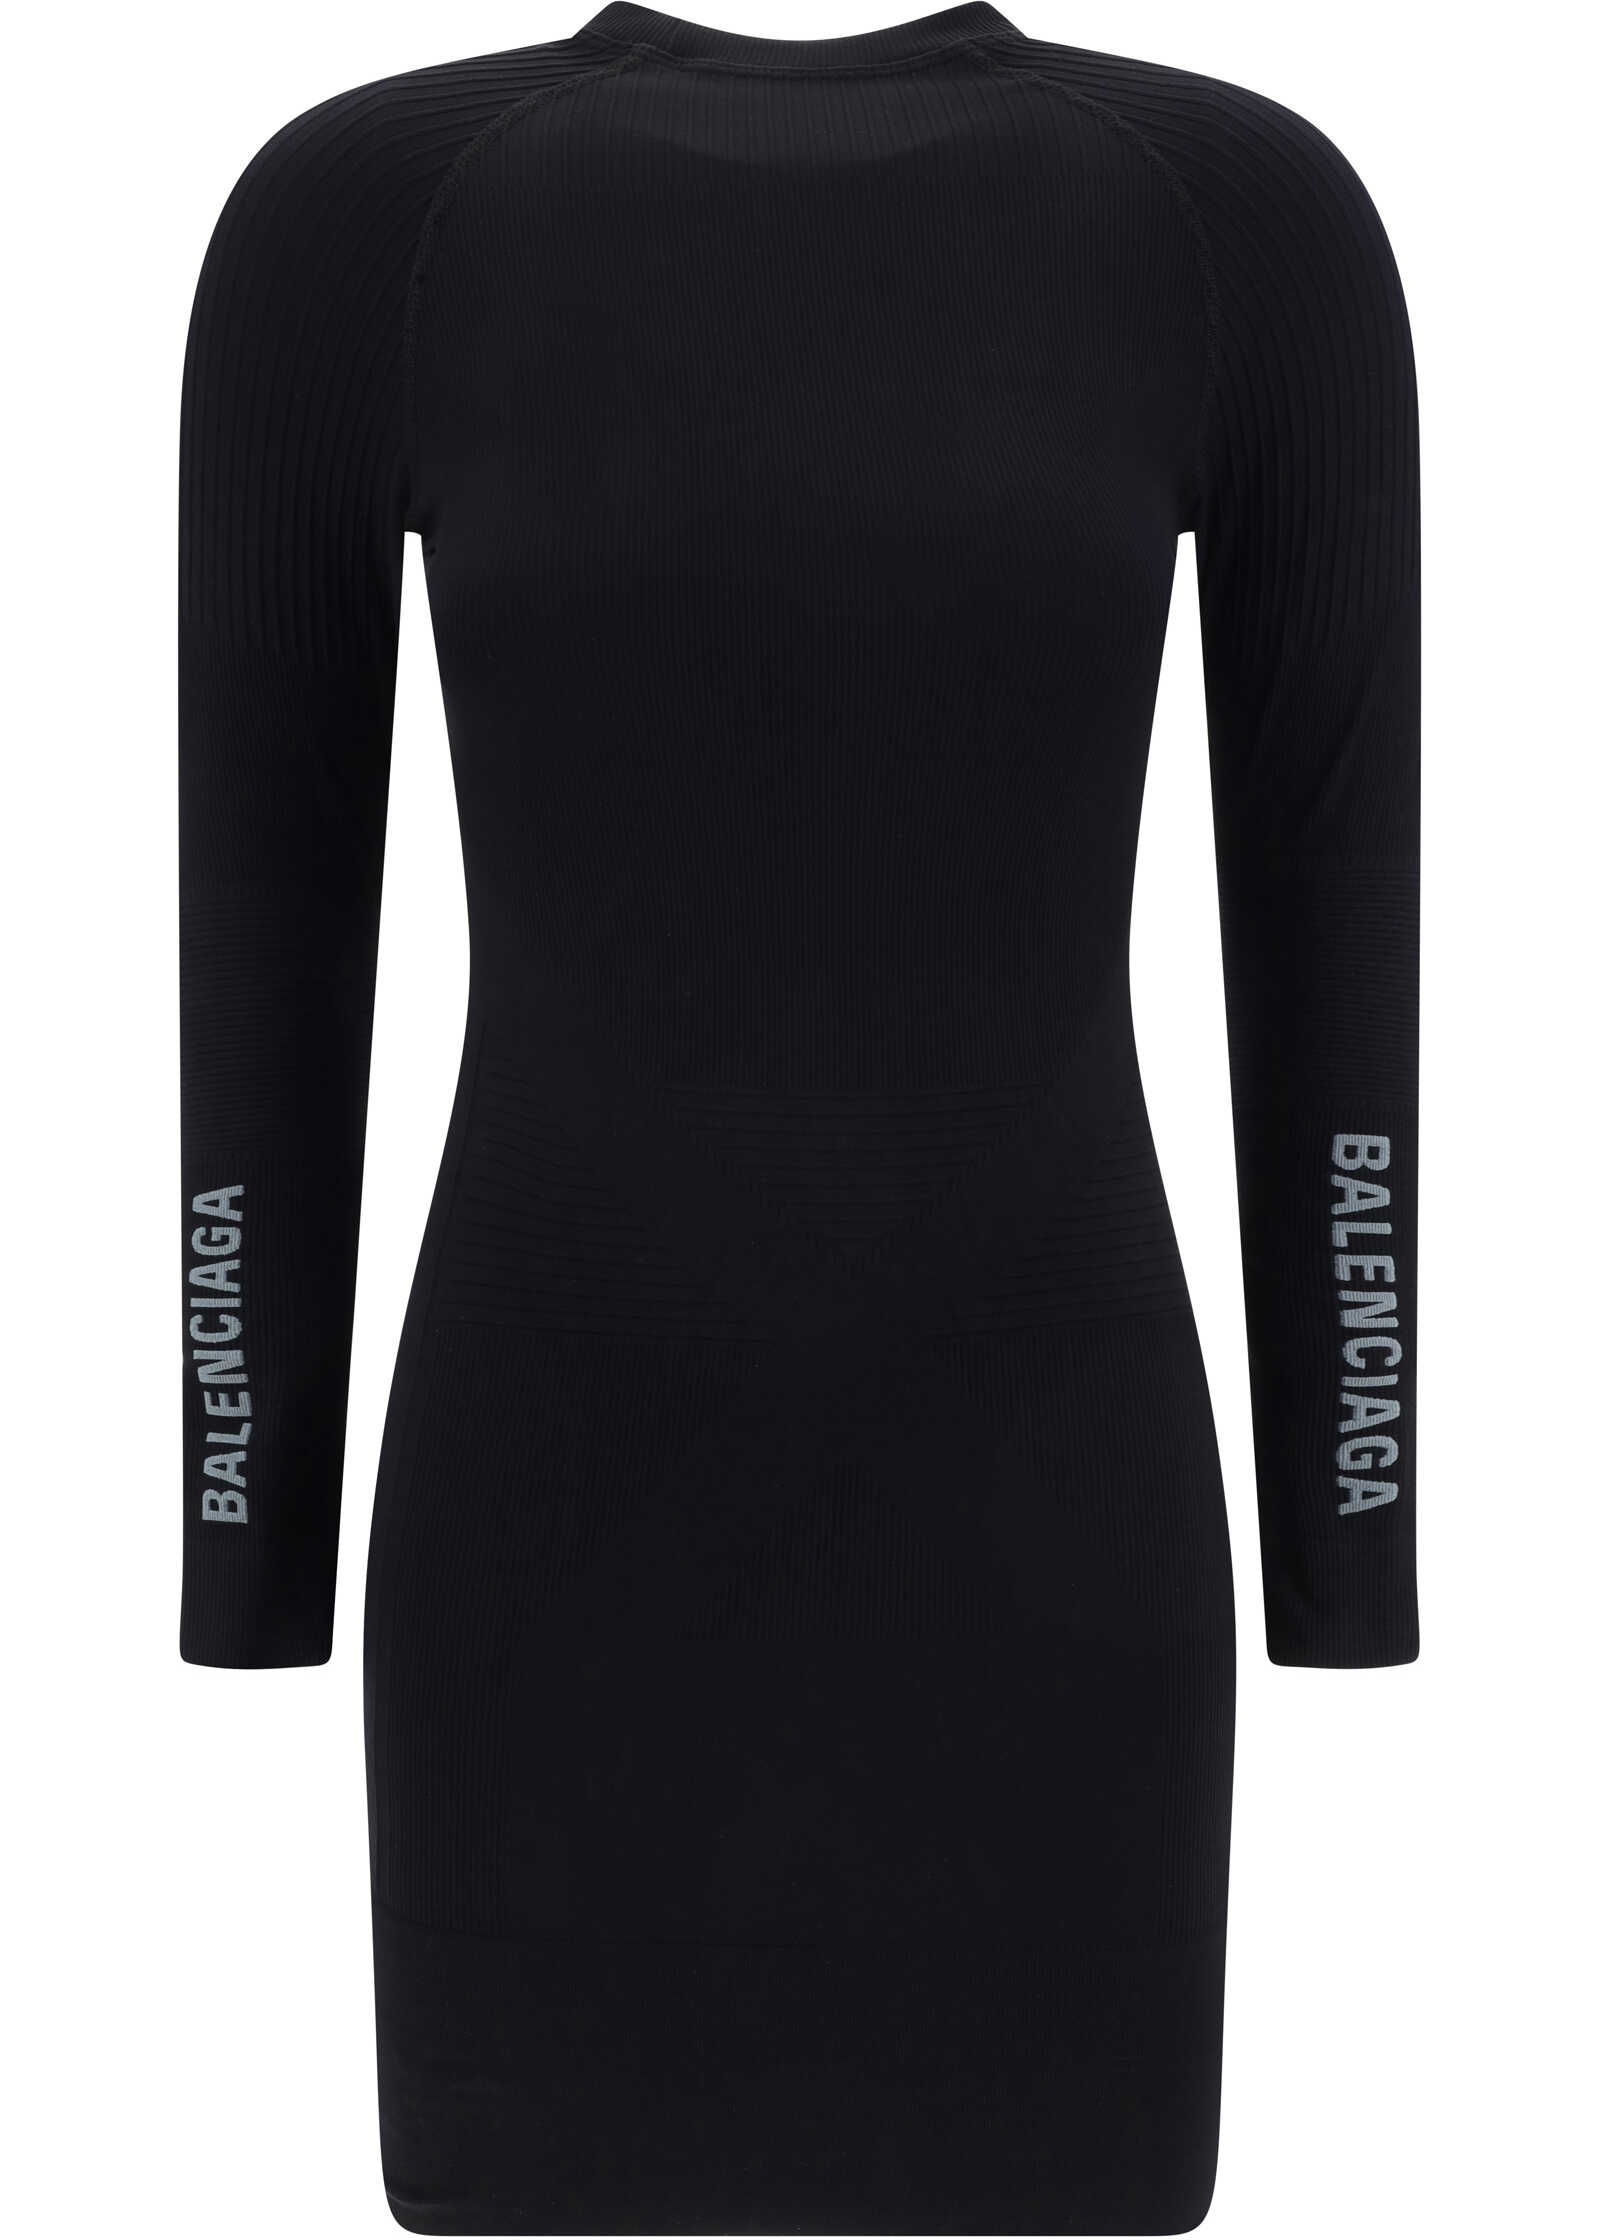 Poze Balenciaga Mini Dress BLACK b-mall.ro 